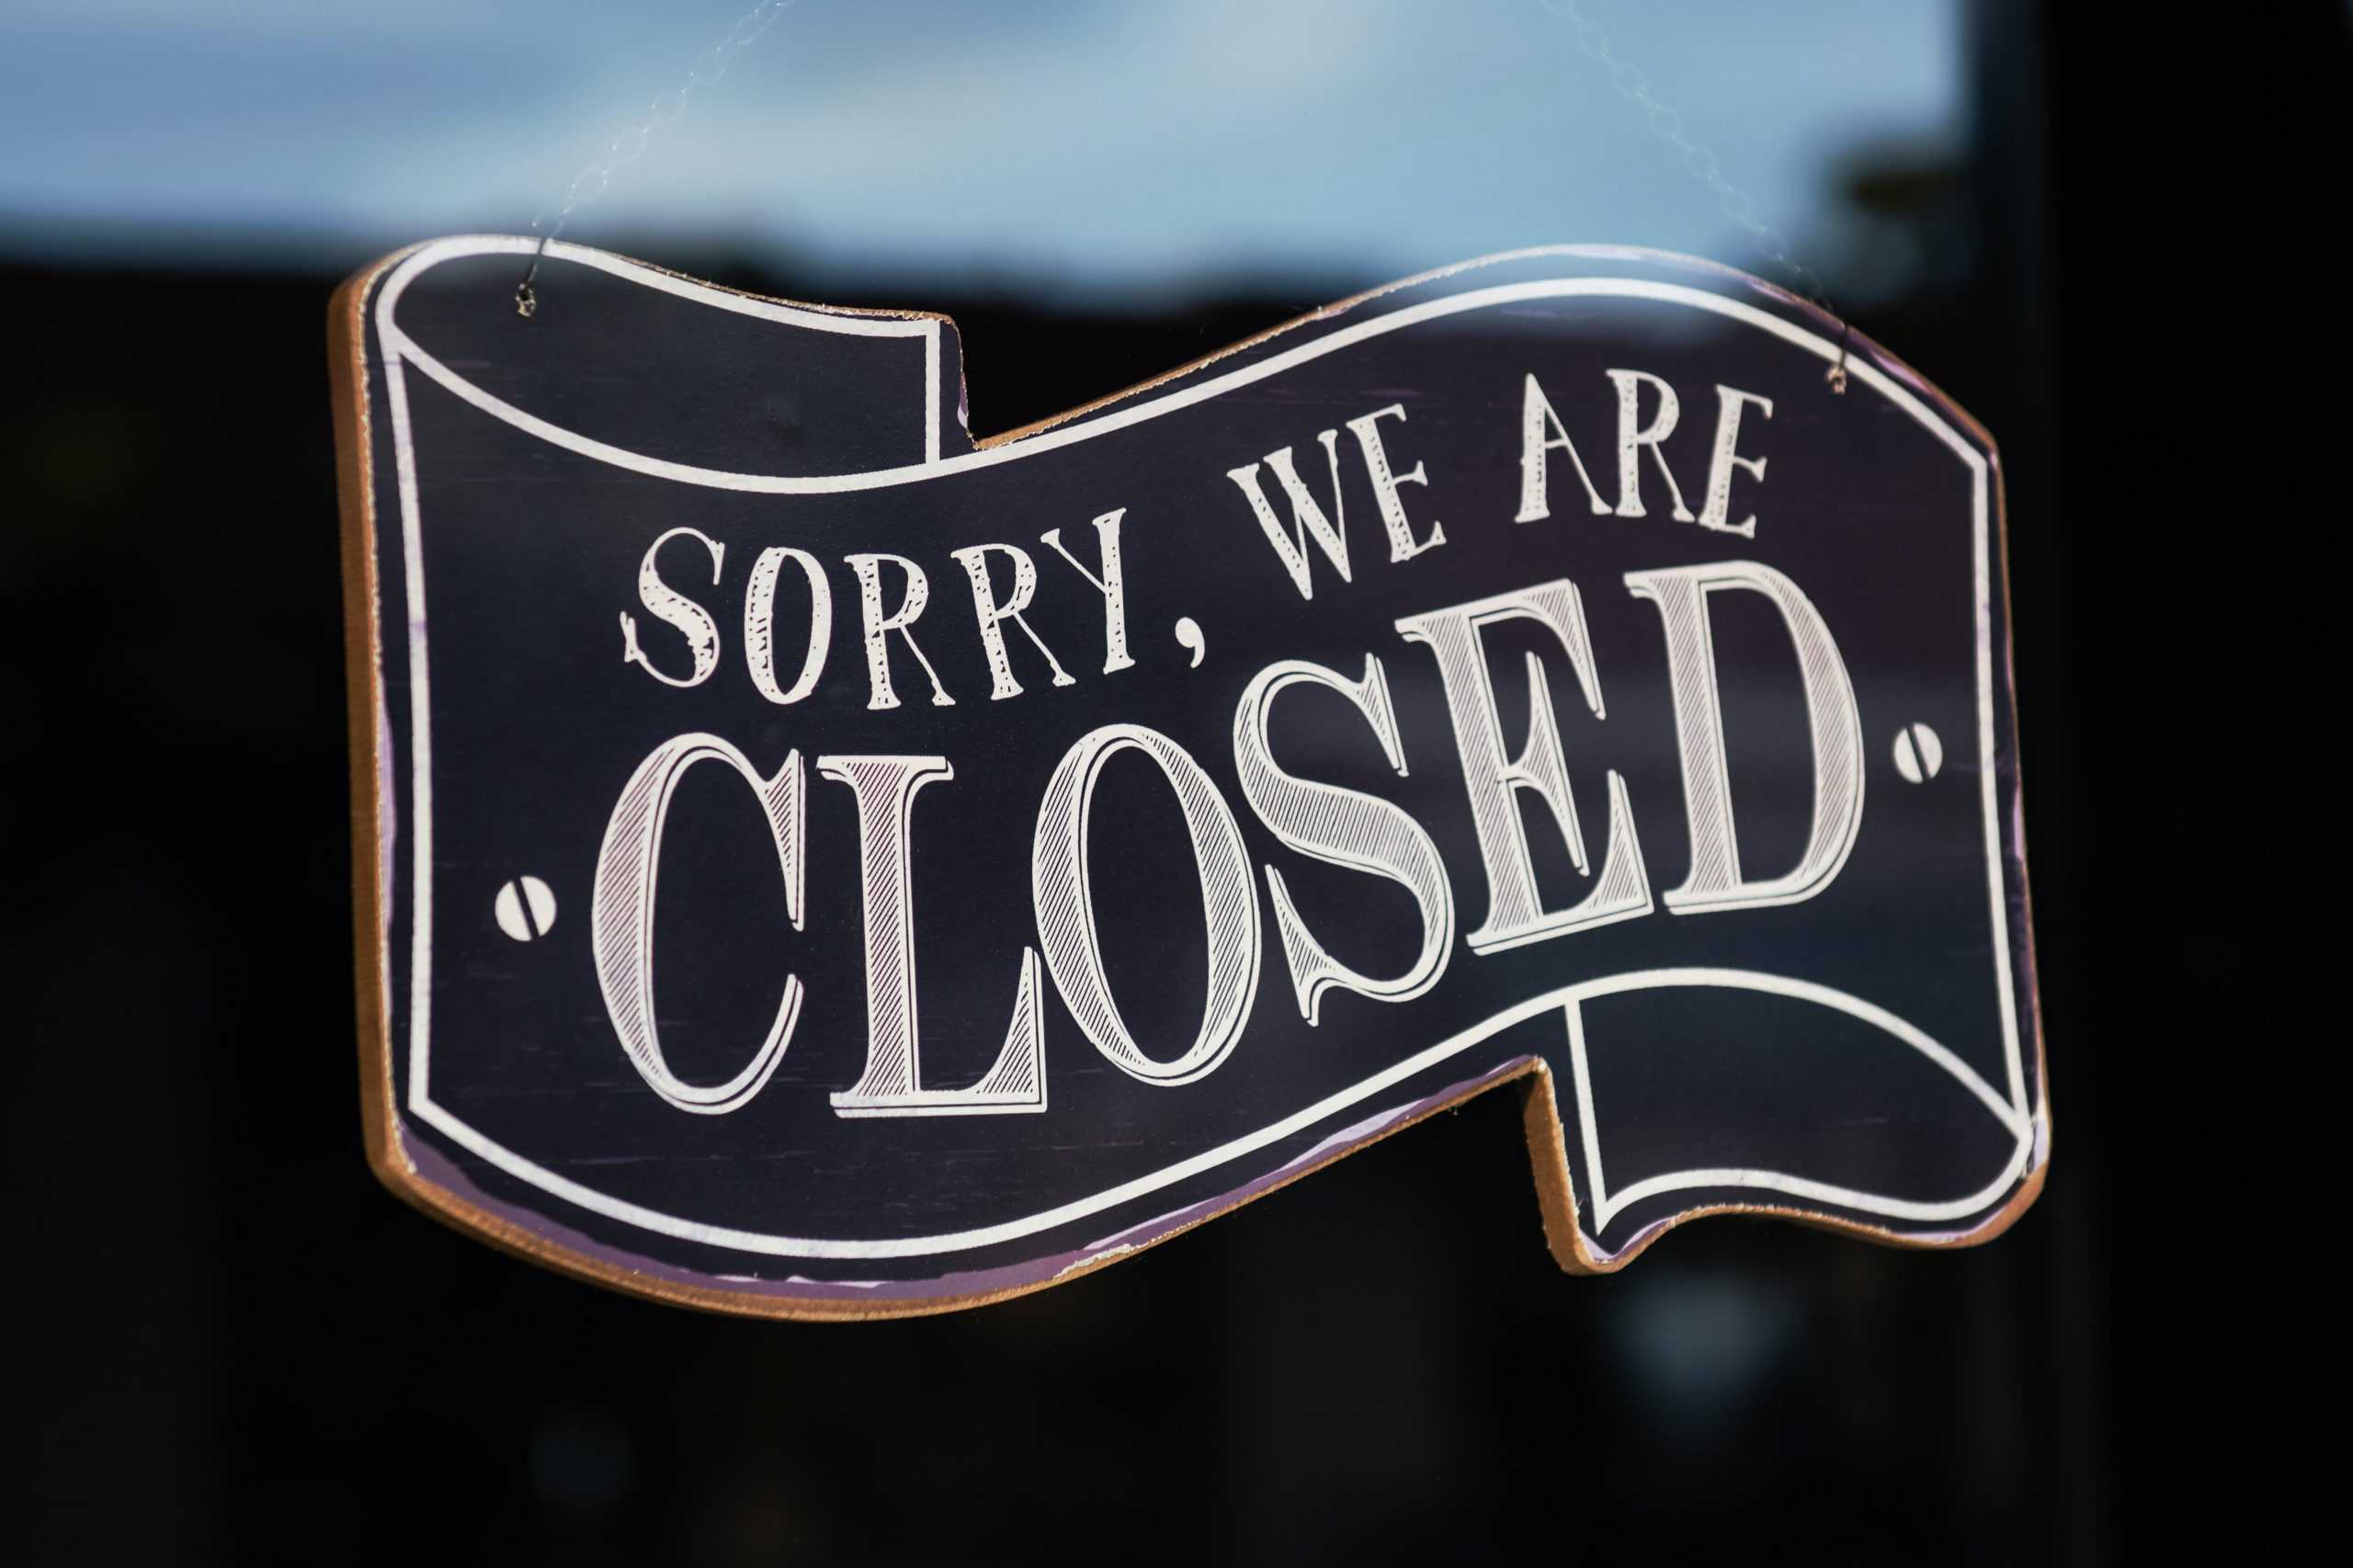 liquor store closed on Sunday